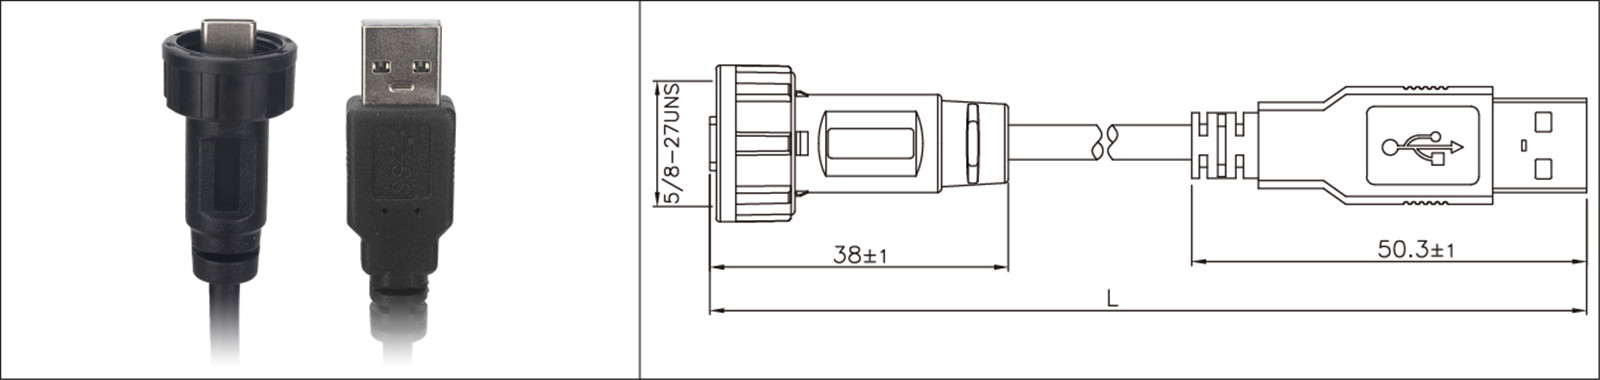 Micro USB 面板安装型 2.0 3.0 母头和公头防水 IP67 包覆成型延长线工业连接器-02 (6)